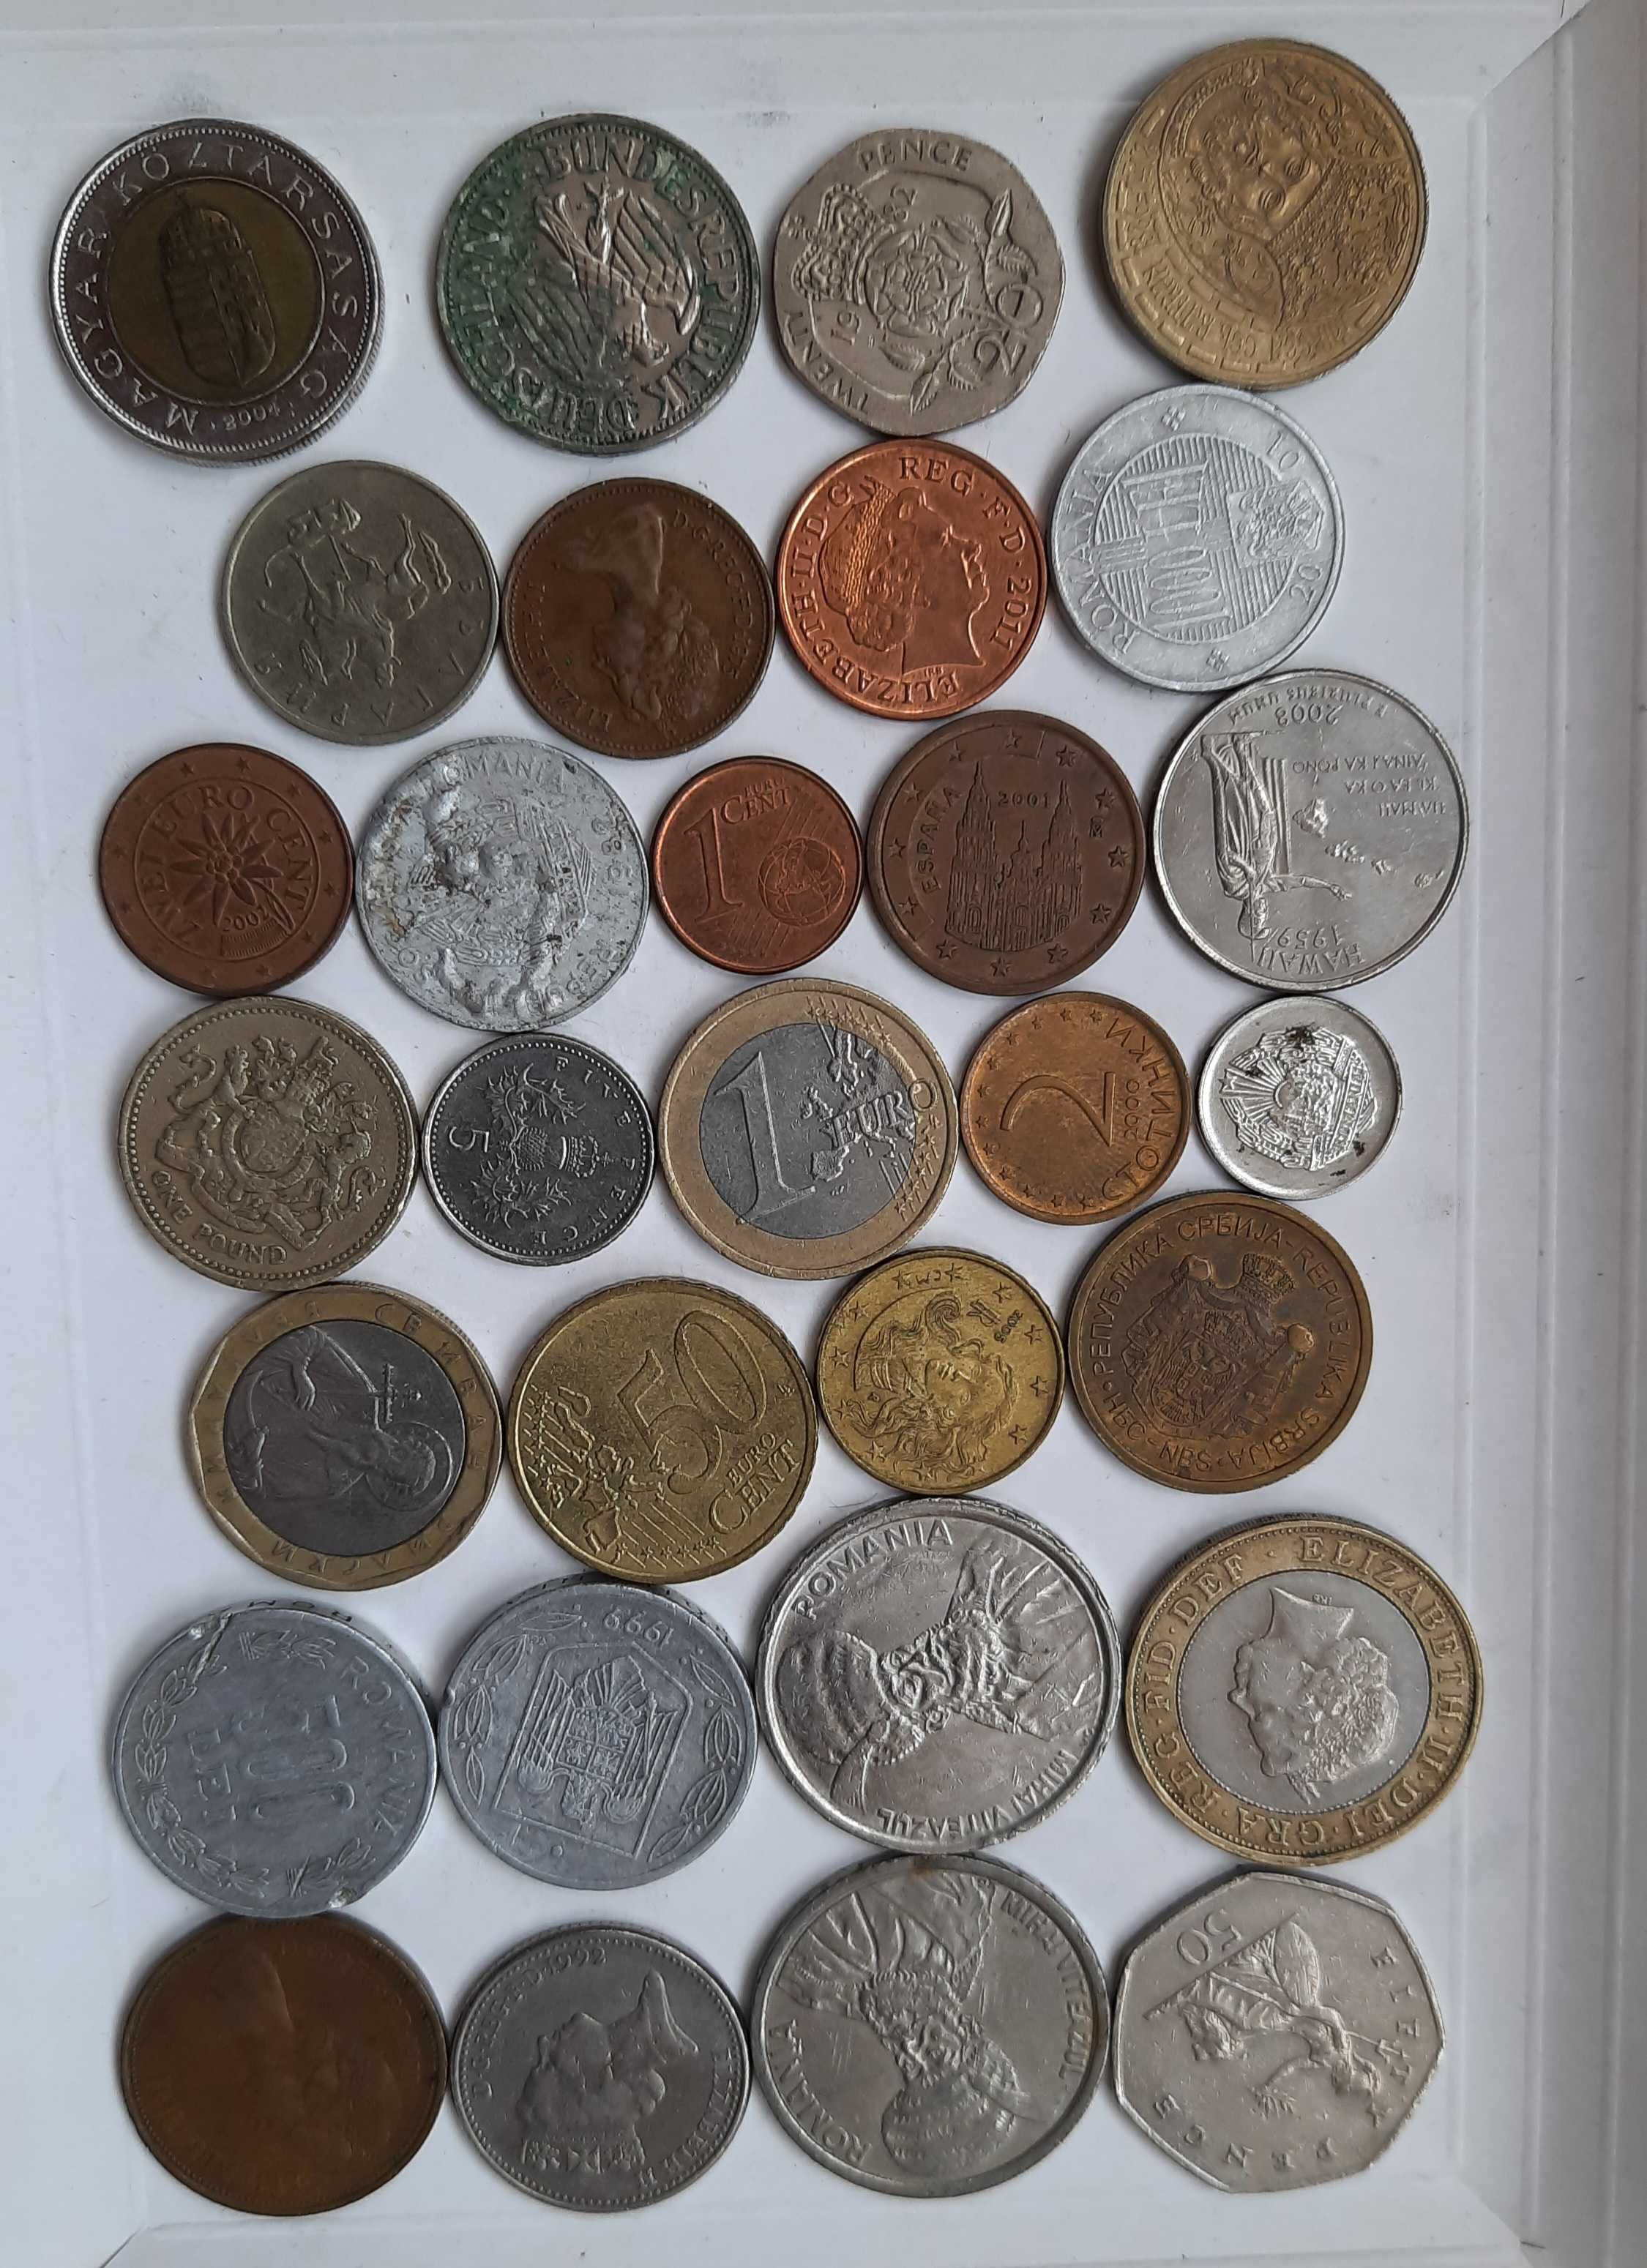 Bani de colectie vechi si noi (bancnote, monede)